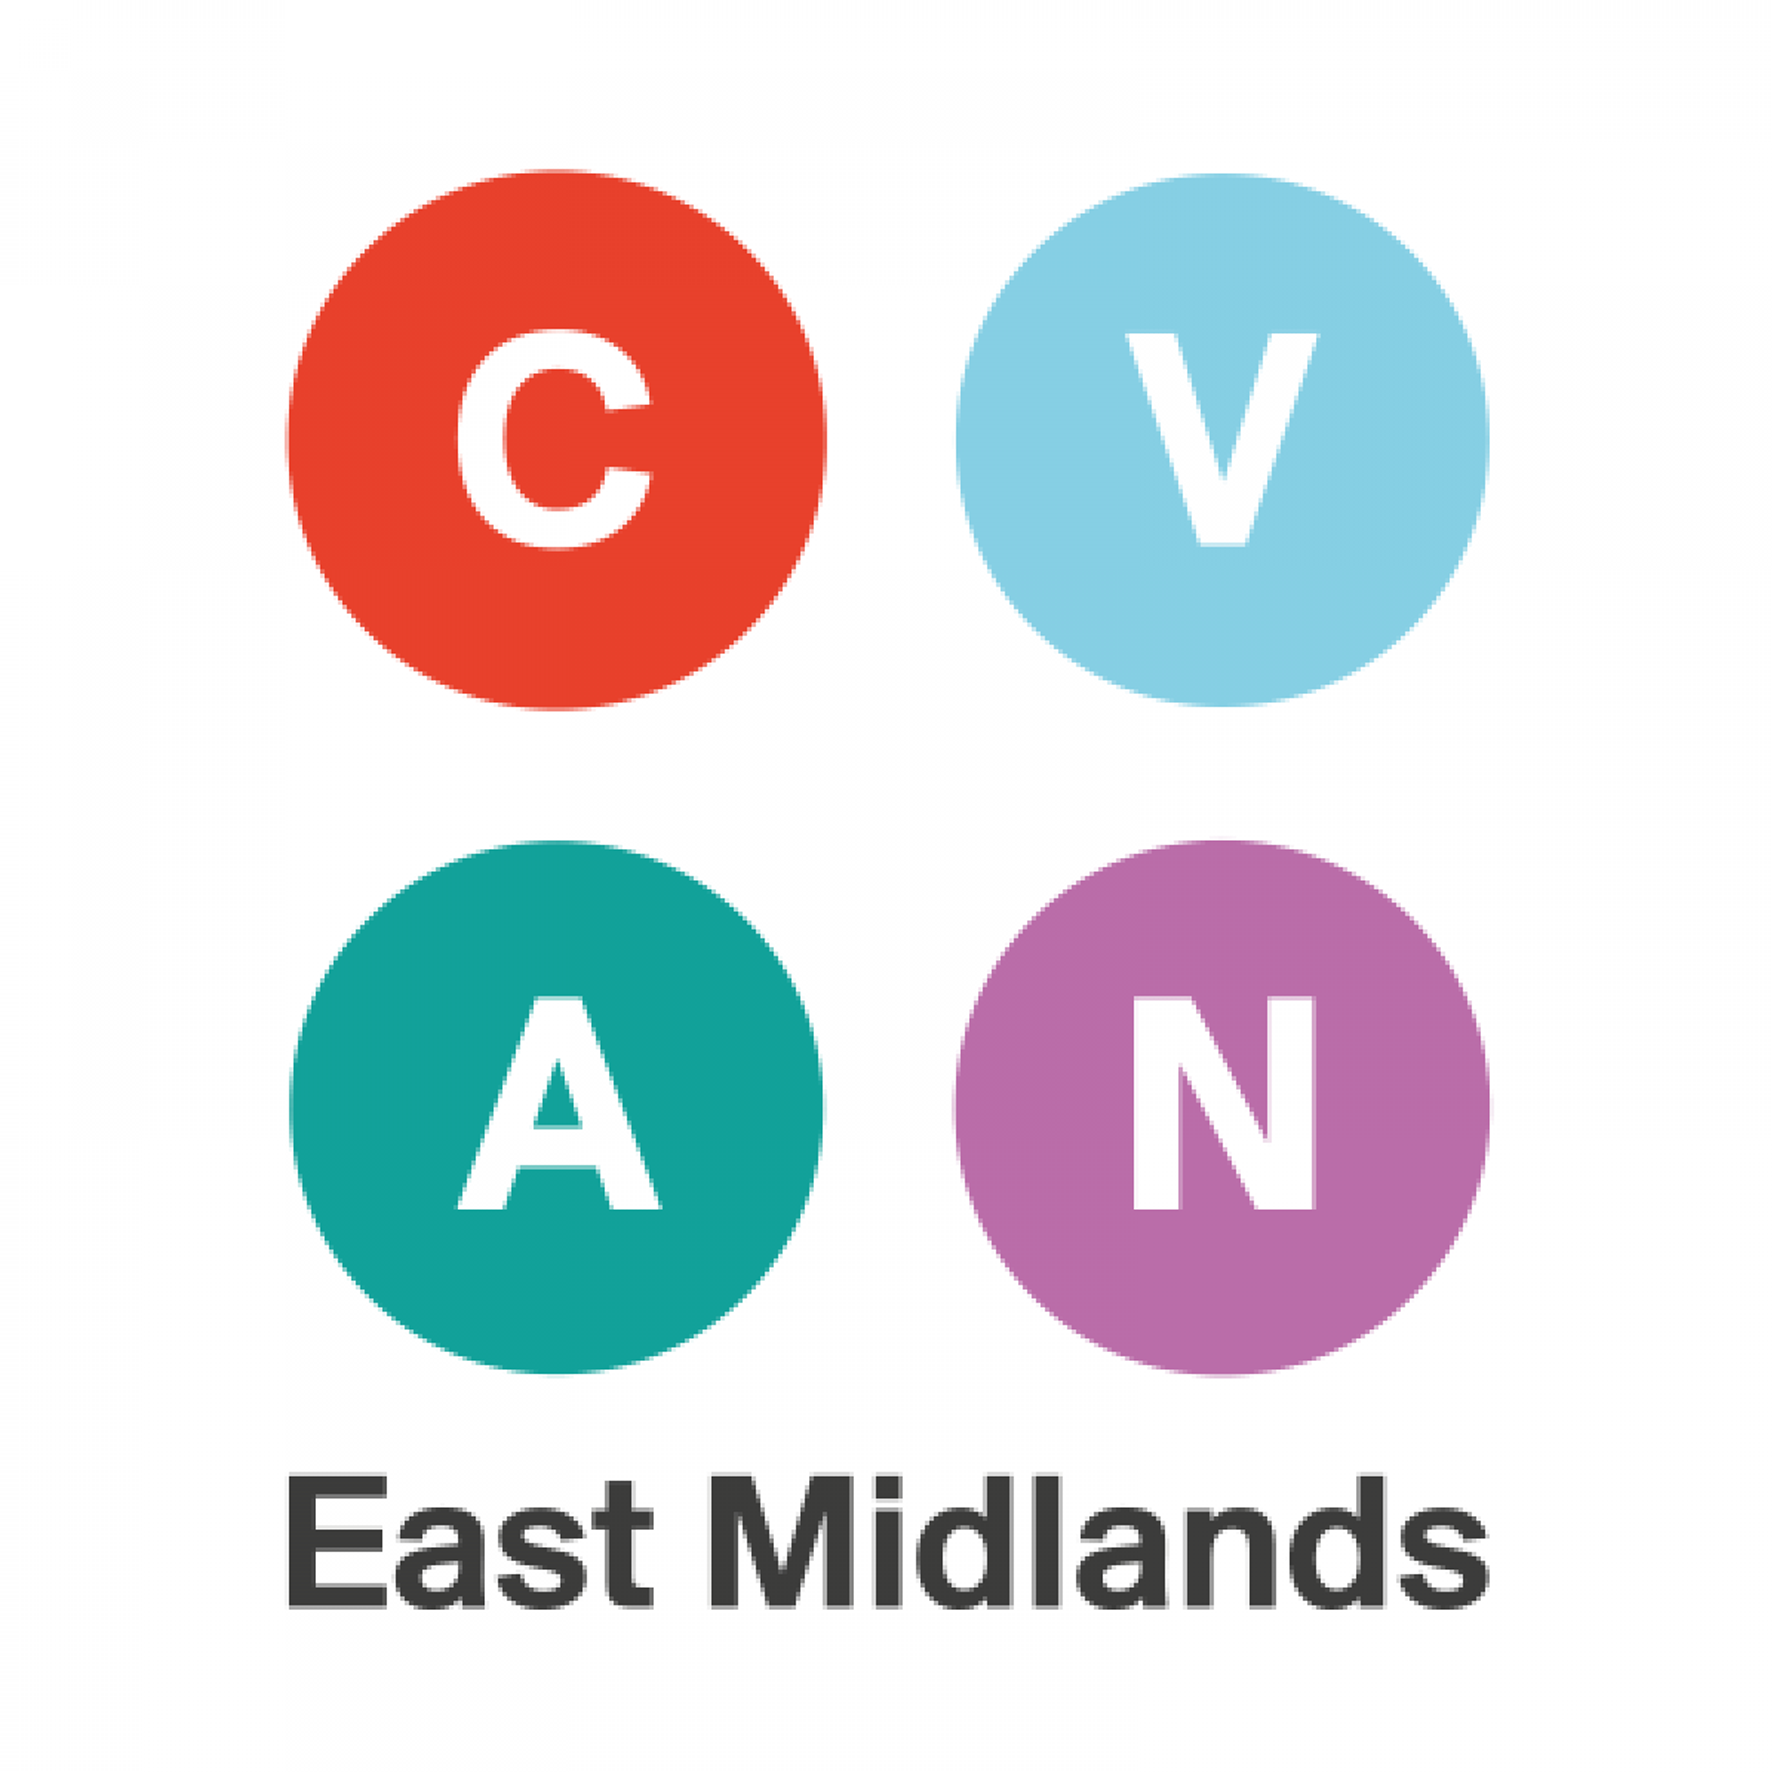 CVAN East Midlands Logo